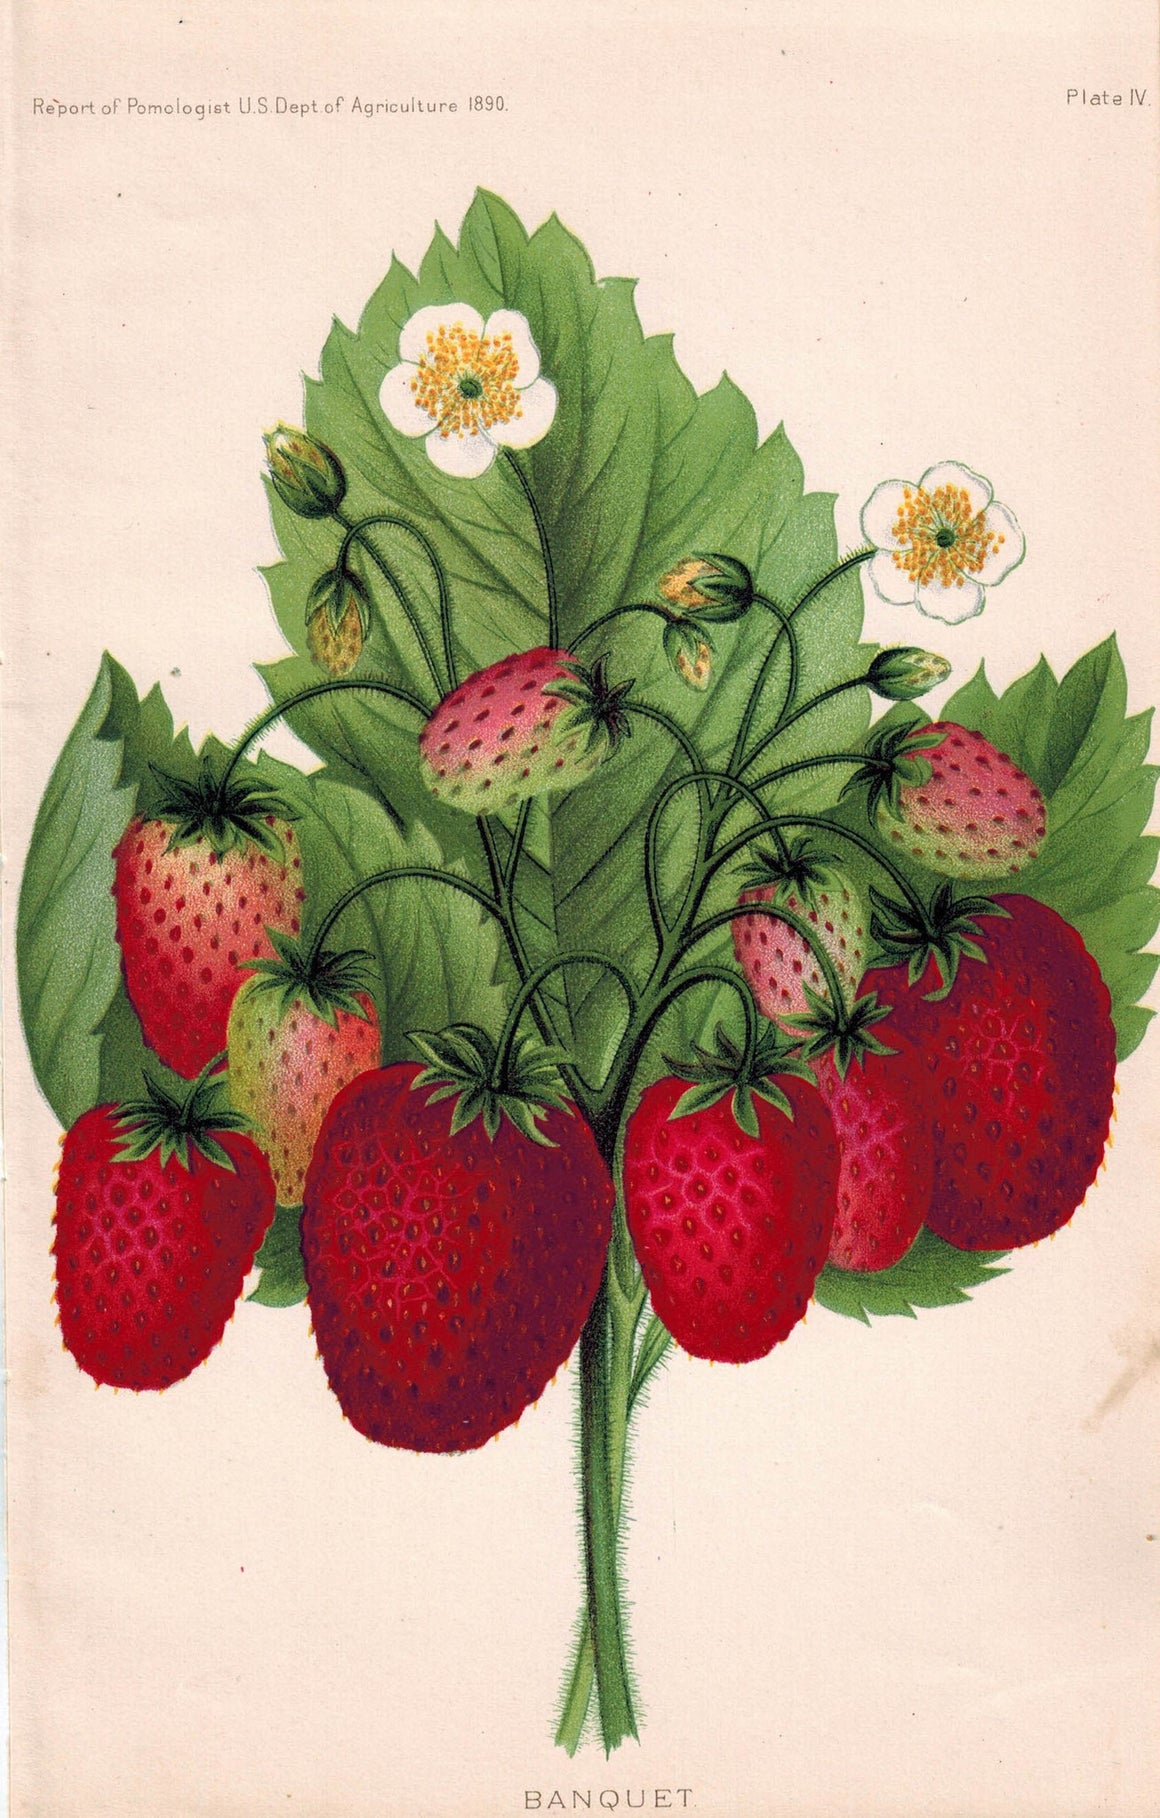 Banquet Strawberry Antique Fruit Print 1890